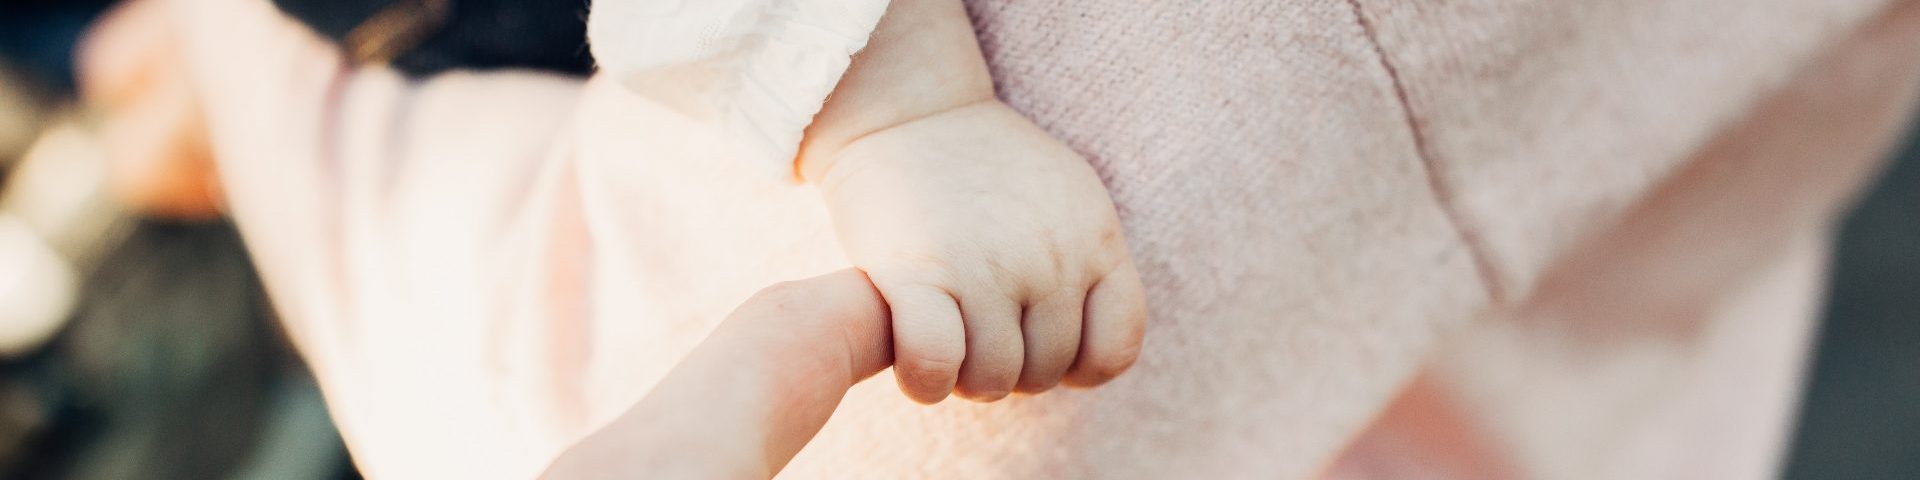 joshua-reddekopp-qLFJKFBppPM-unsplash person holding baby's hand